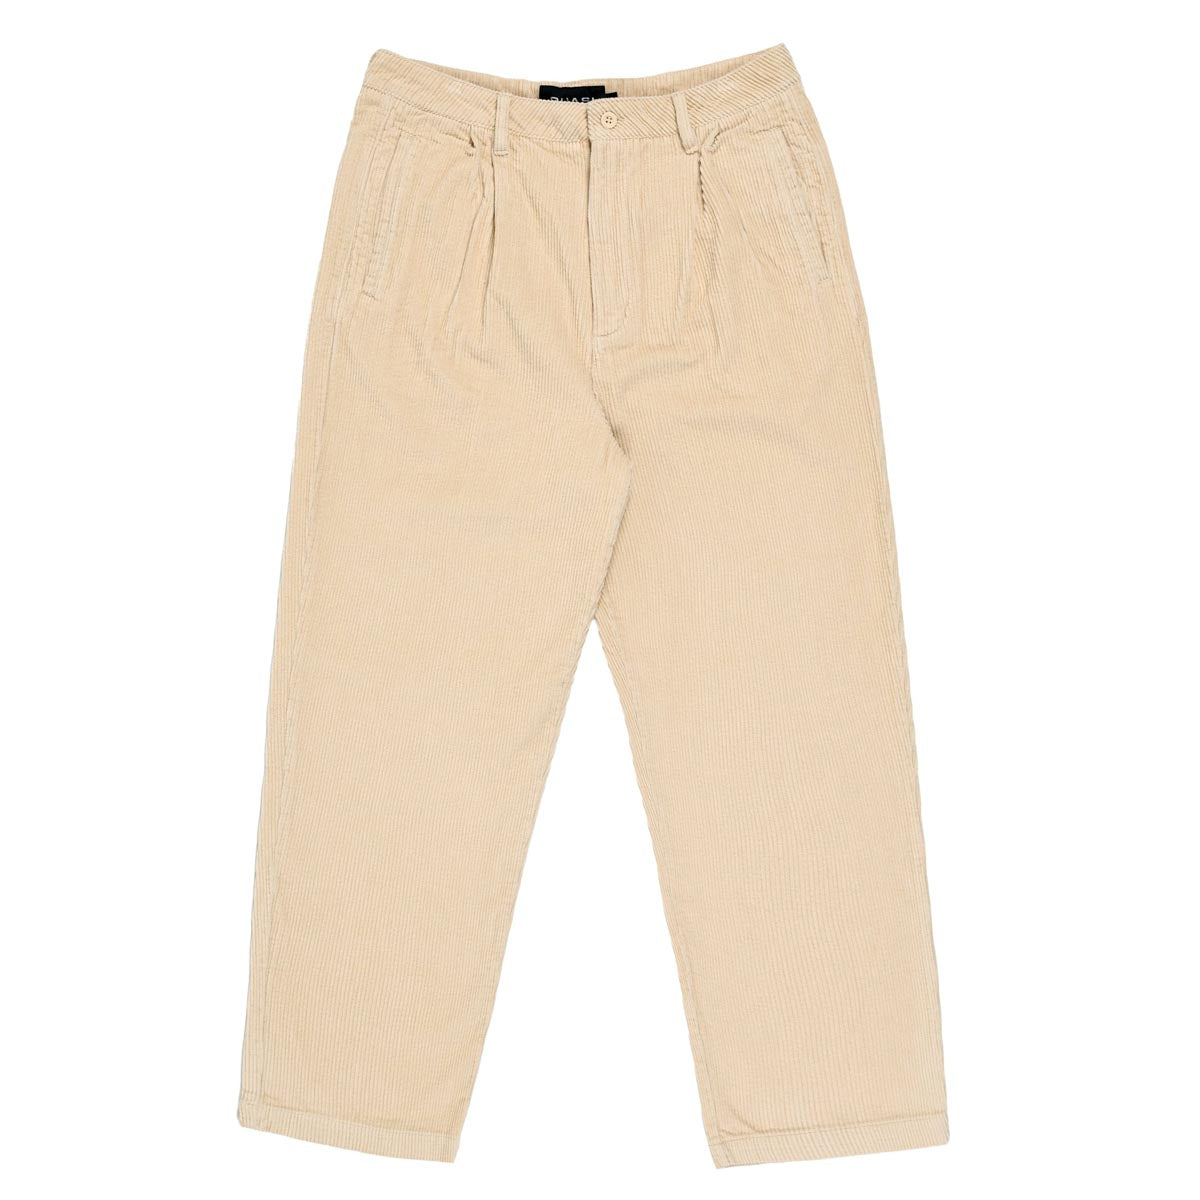 Quasi Elliott Trouser Pants - Limestone image 1